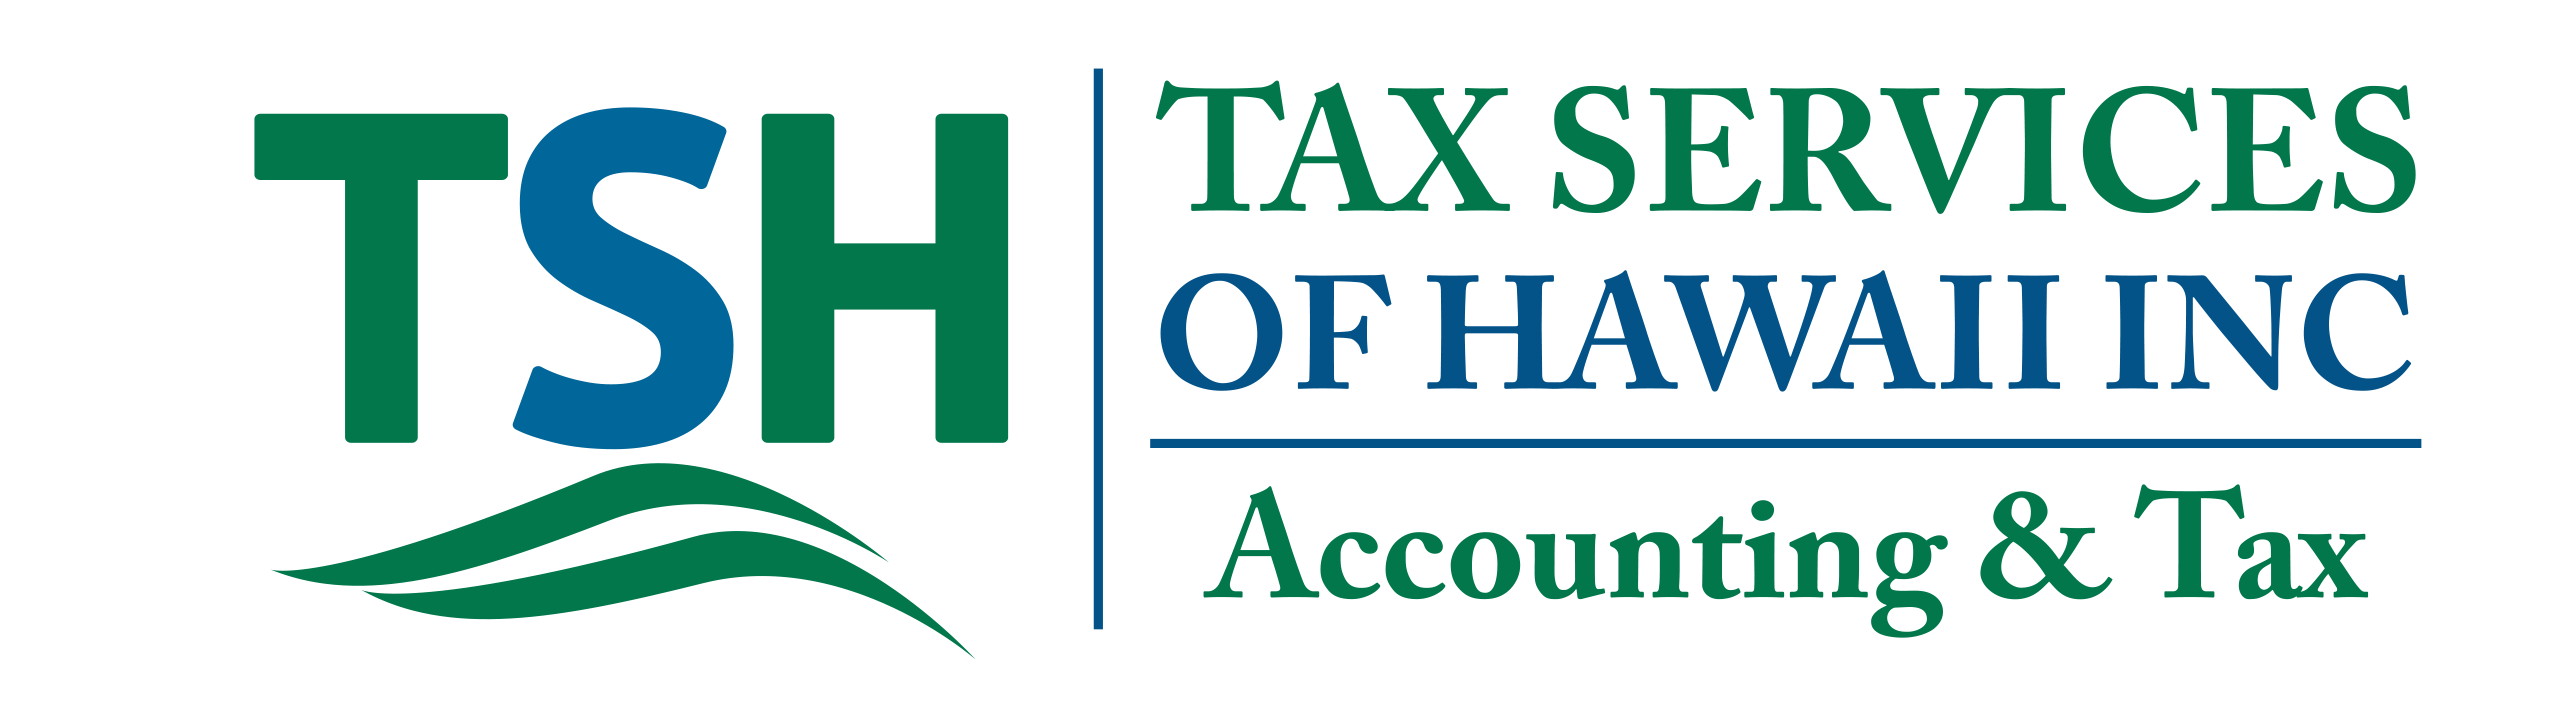 Tax Services of Hawaii